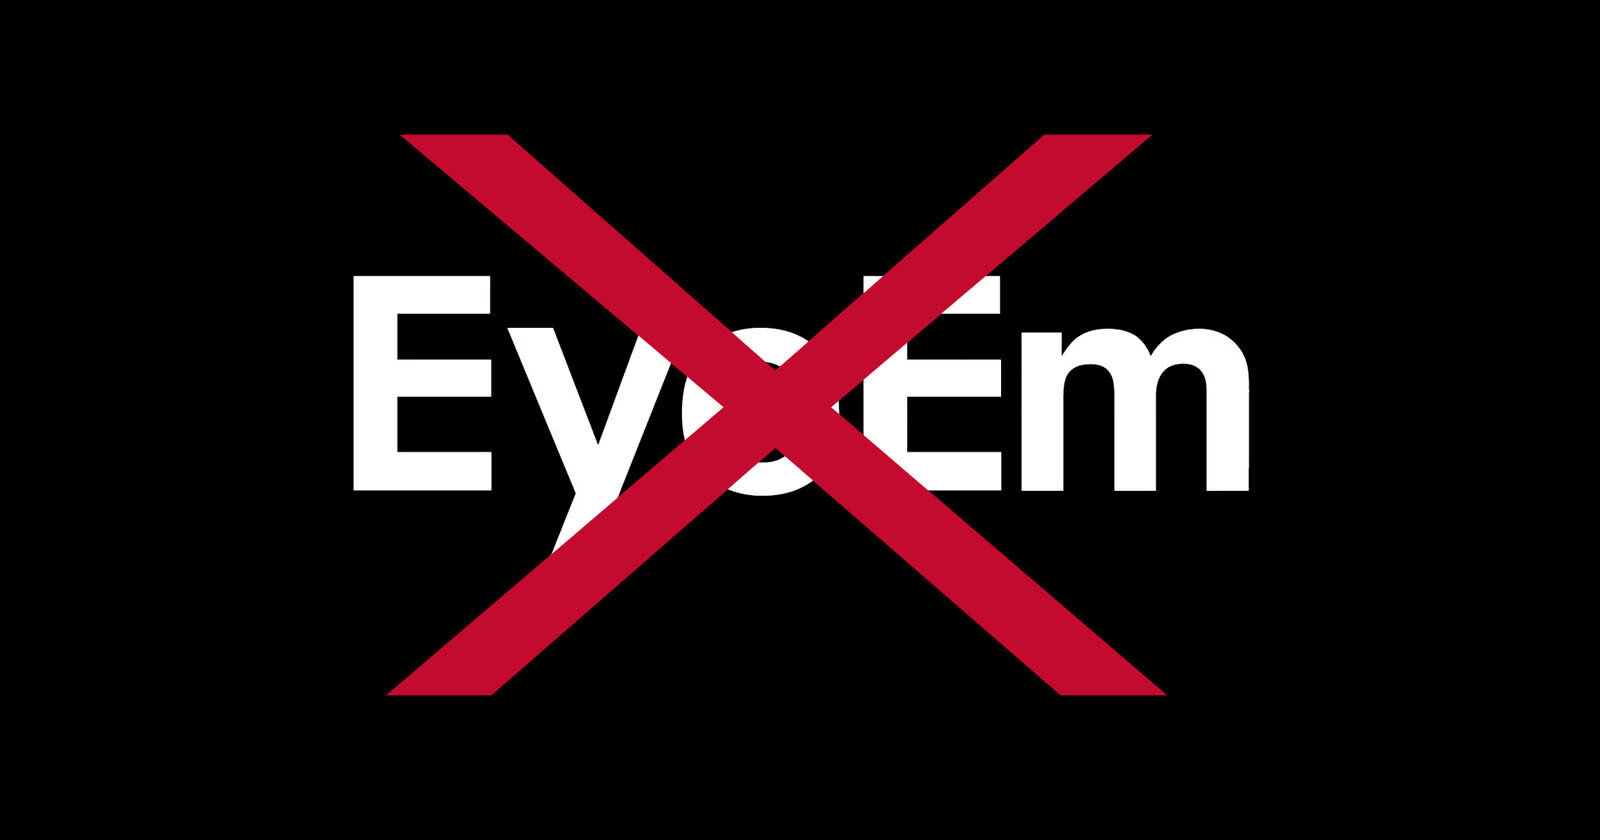  eyeem has filed bankruptcy 